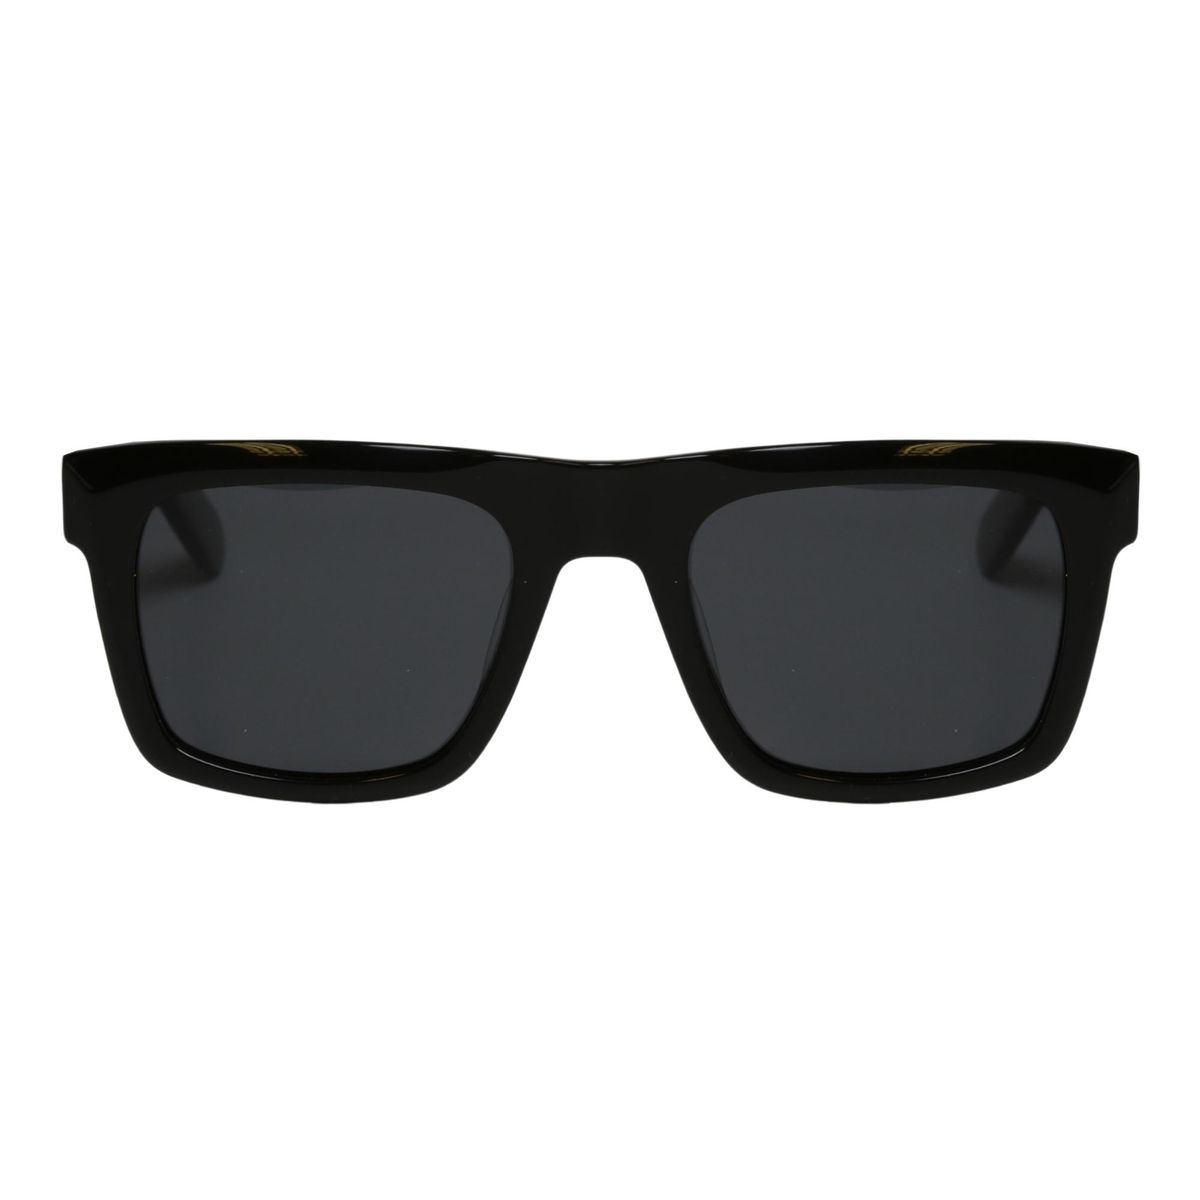 Superfine Sunglasses Sivu Black | Buy Online in South Africa | takealot.com